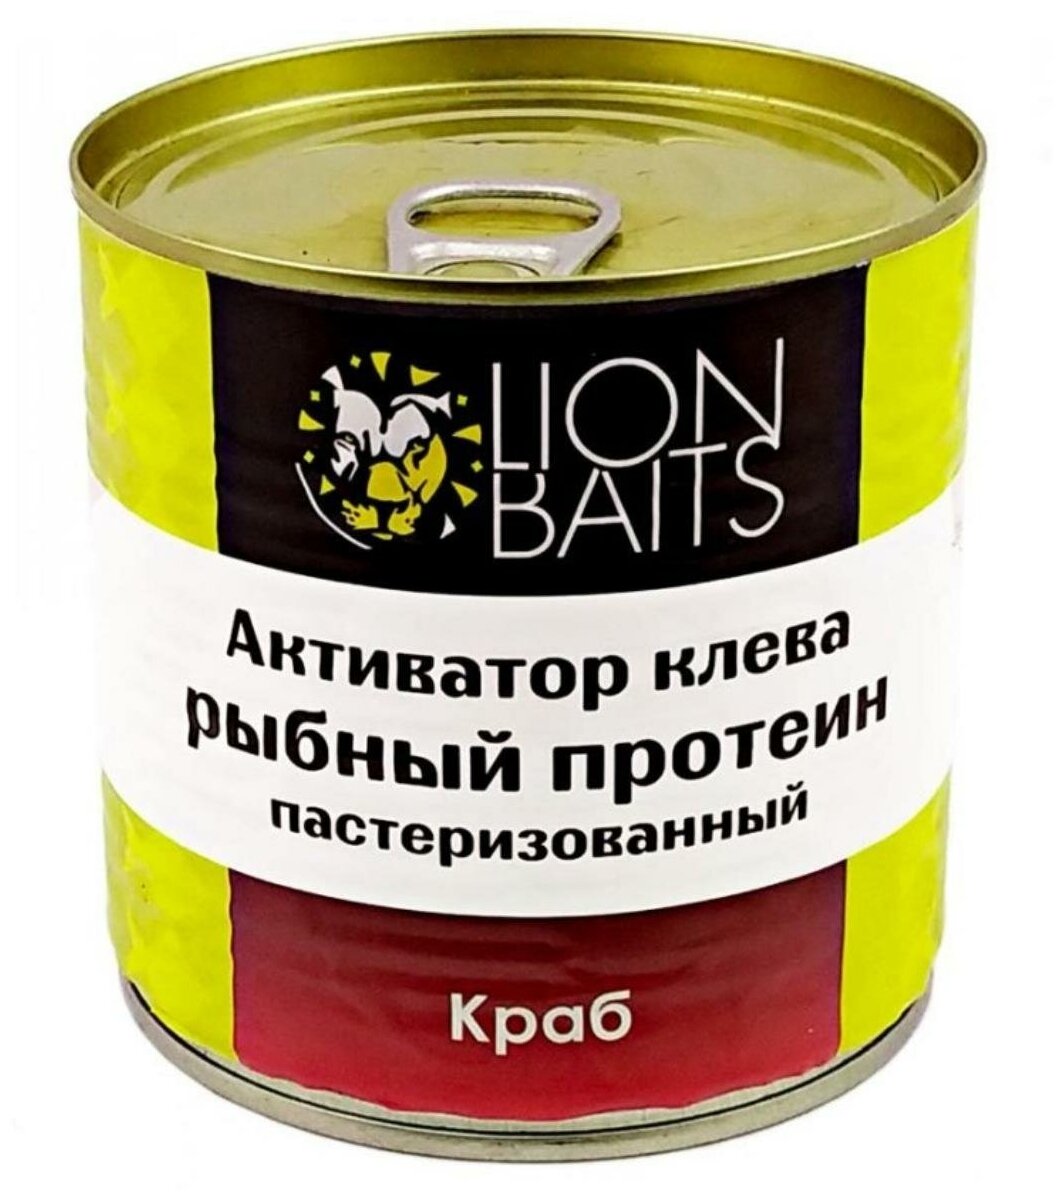 Активатор клёва жидкий Lion Baits рыбный протеин 430мл краб, банка: металл, LBFP-0004, пастеризов.